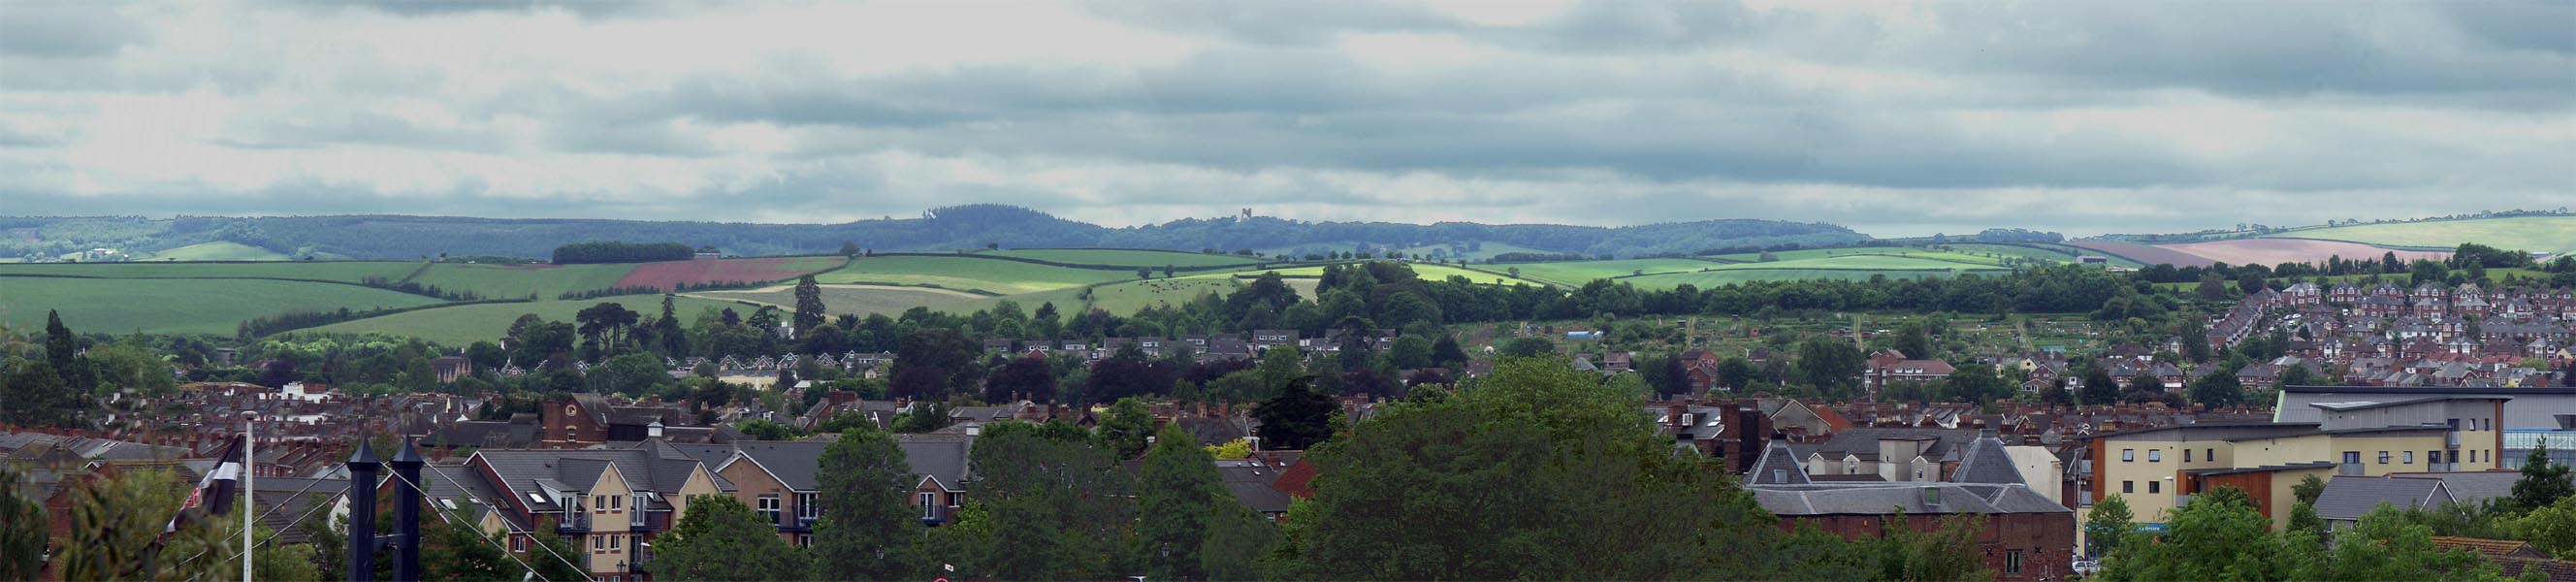 Exeter Hills panoramic-1.jpg